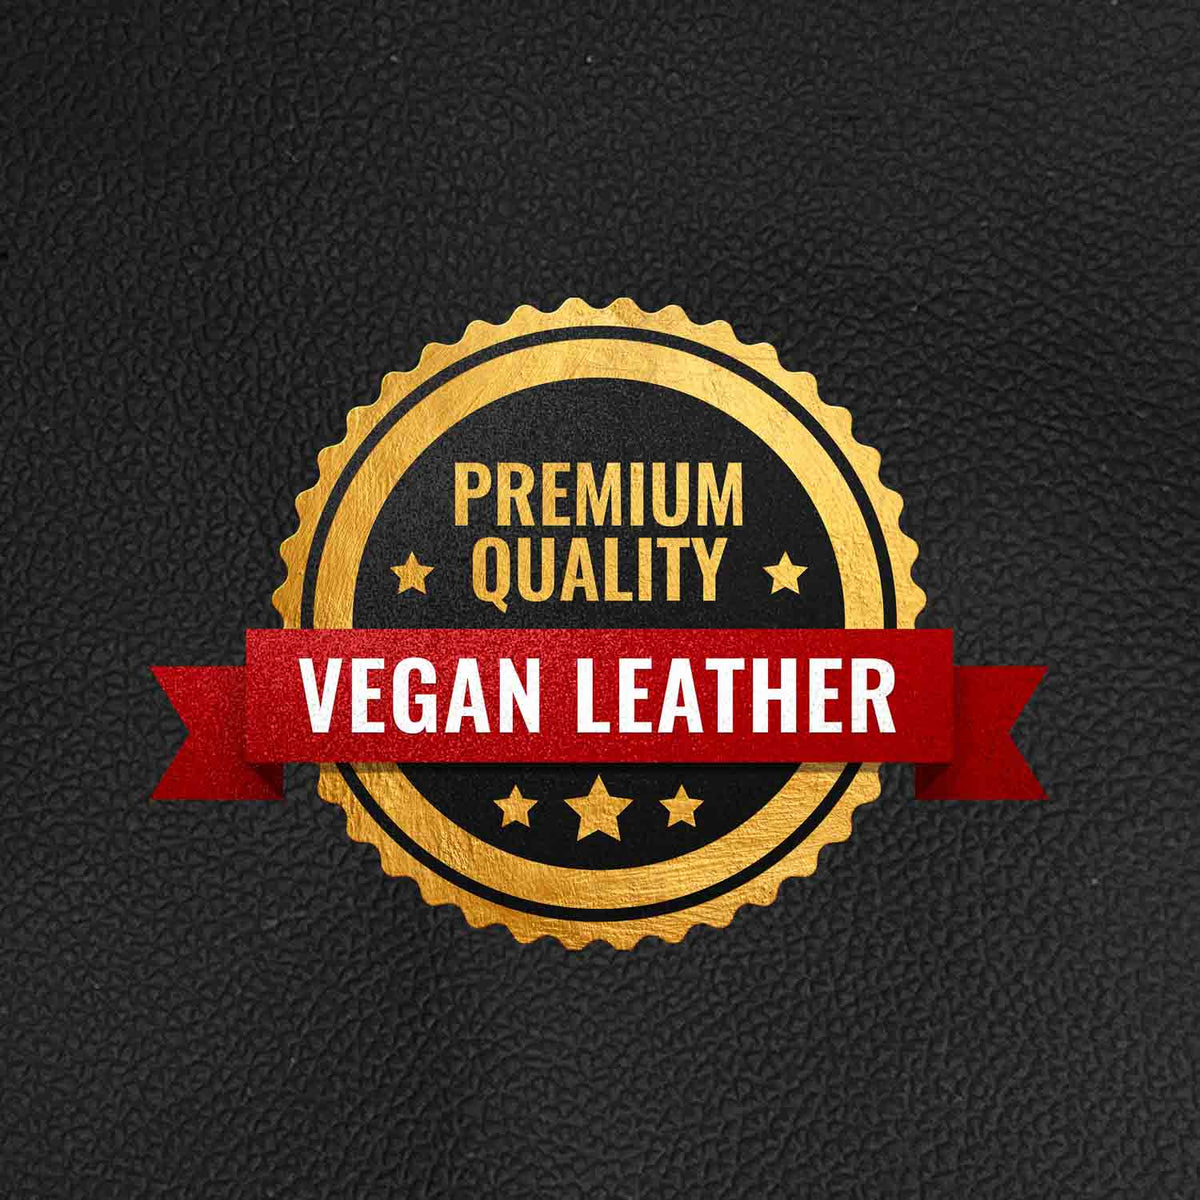 Vegan Leather Apron 